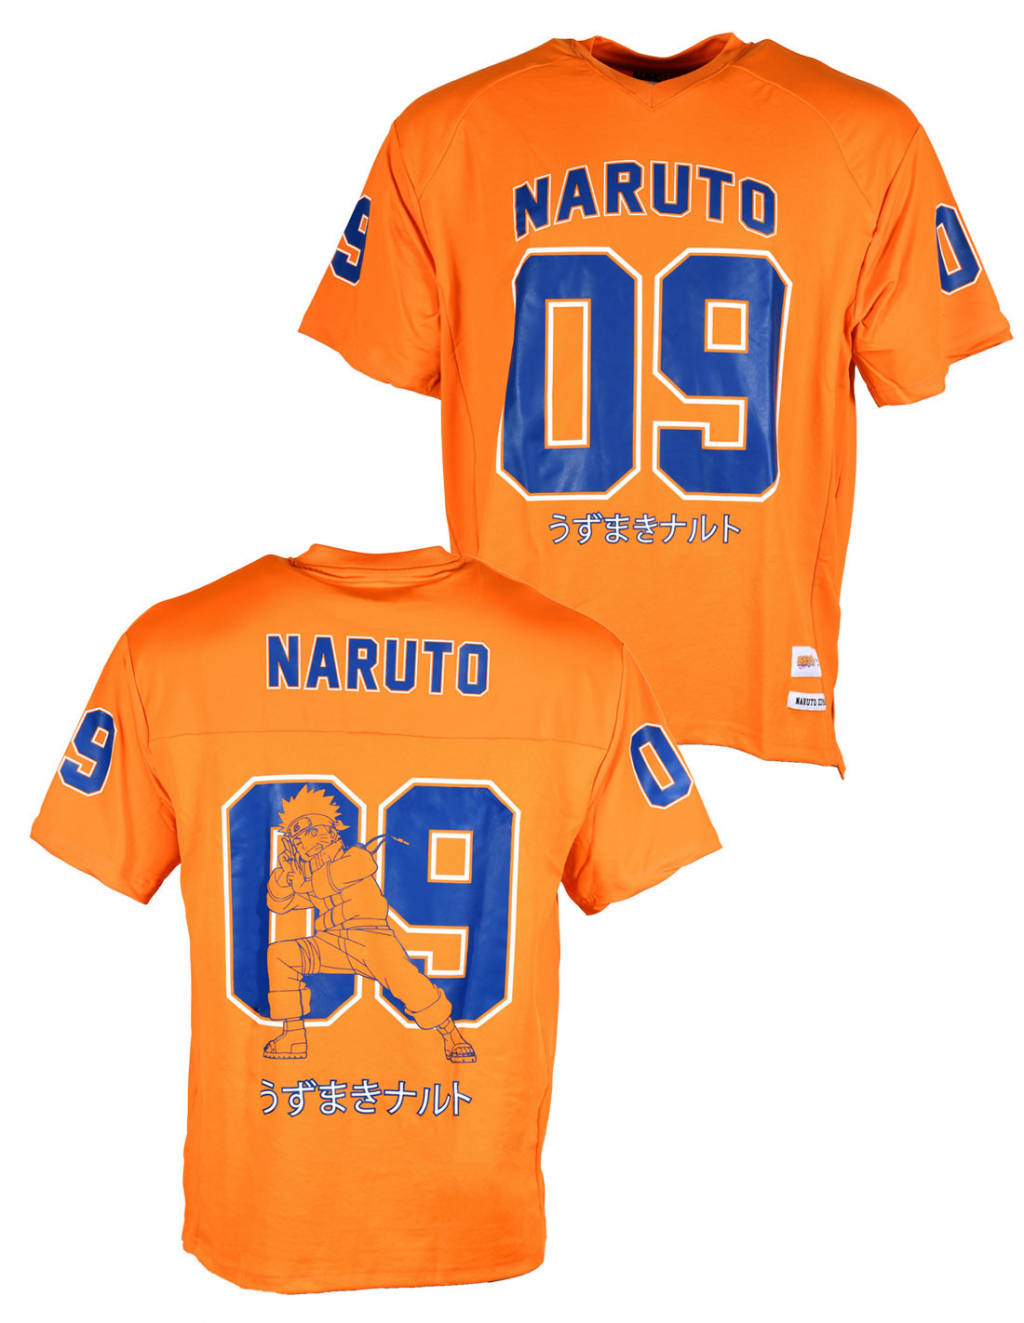 NARUTO - Naruto Uzumaki - T-Shirt Sports US Replica unisex (S)